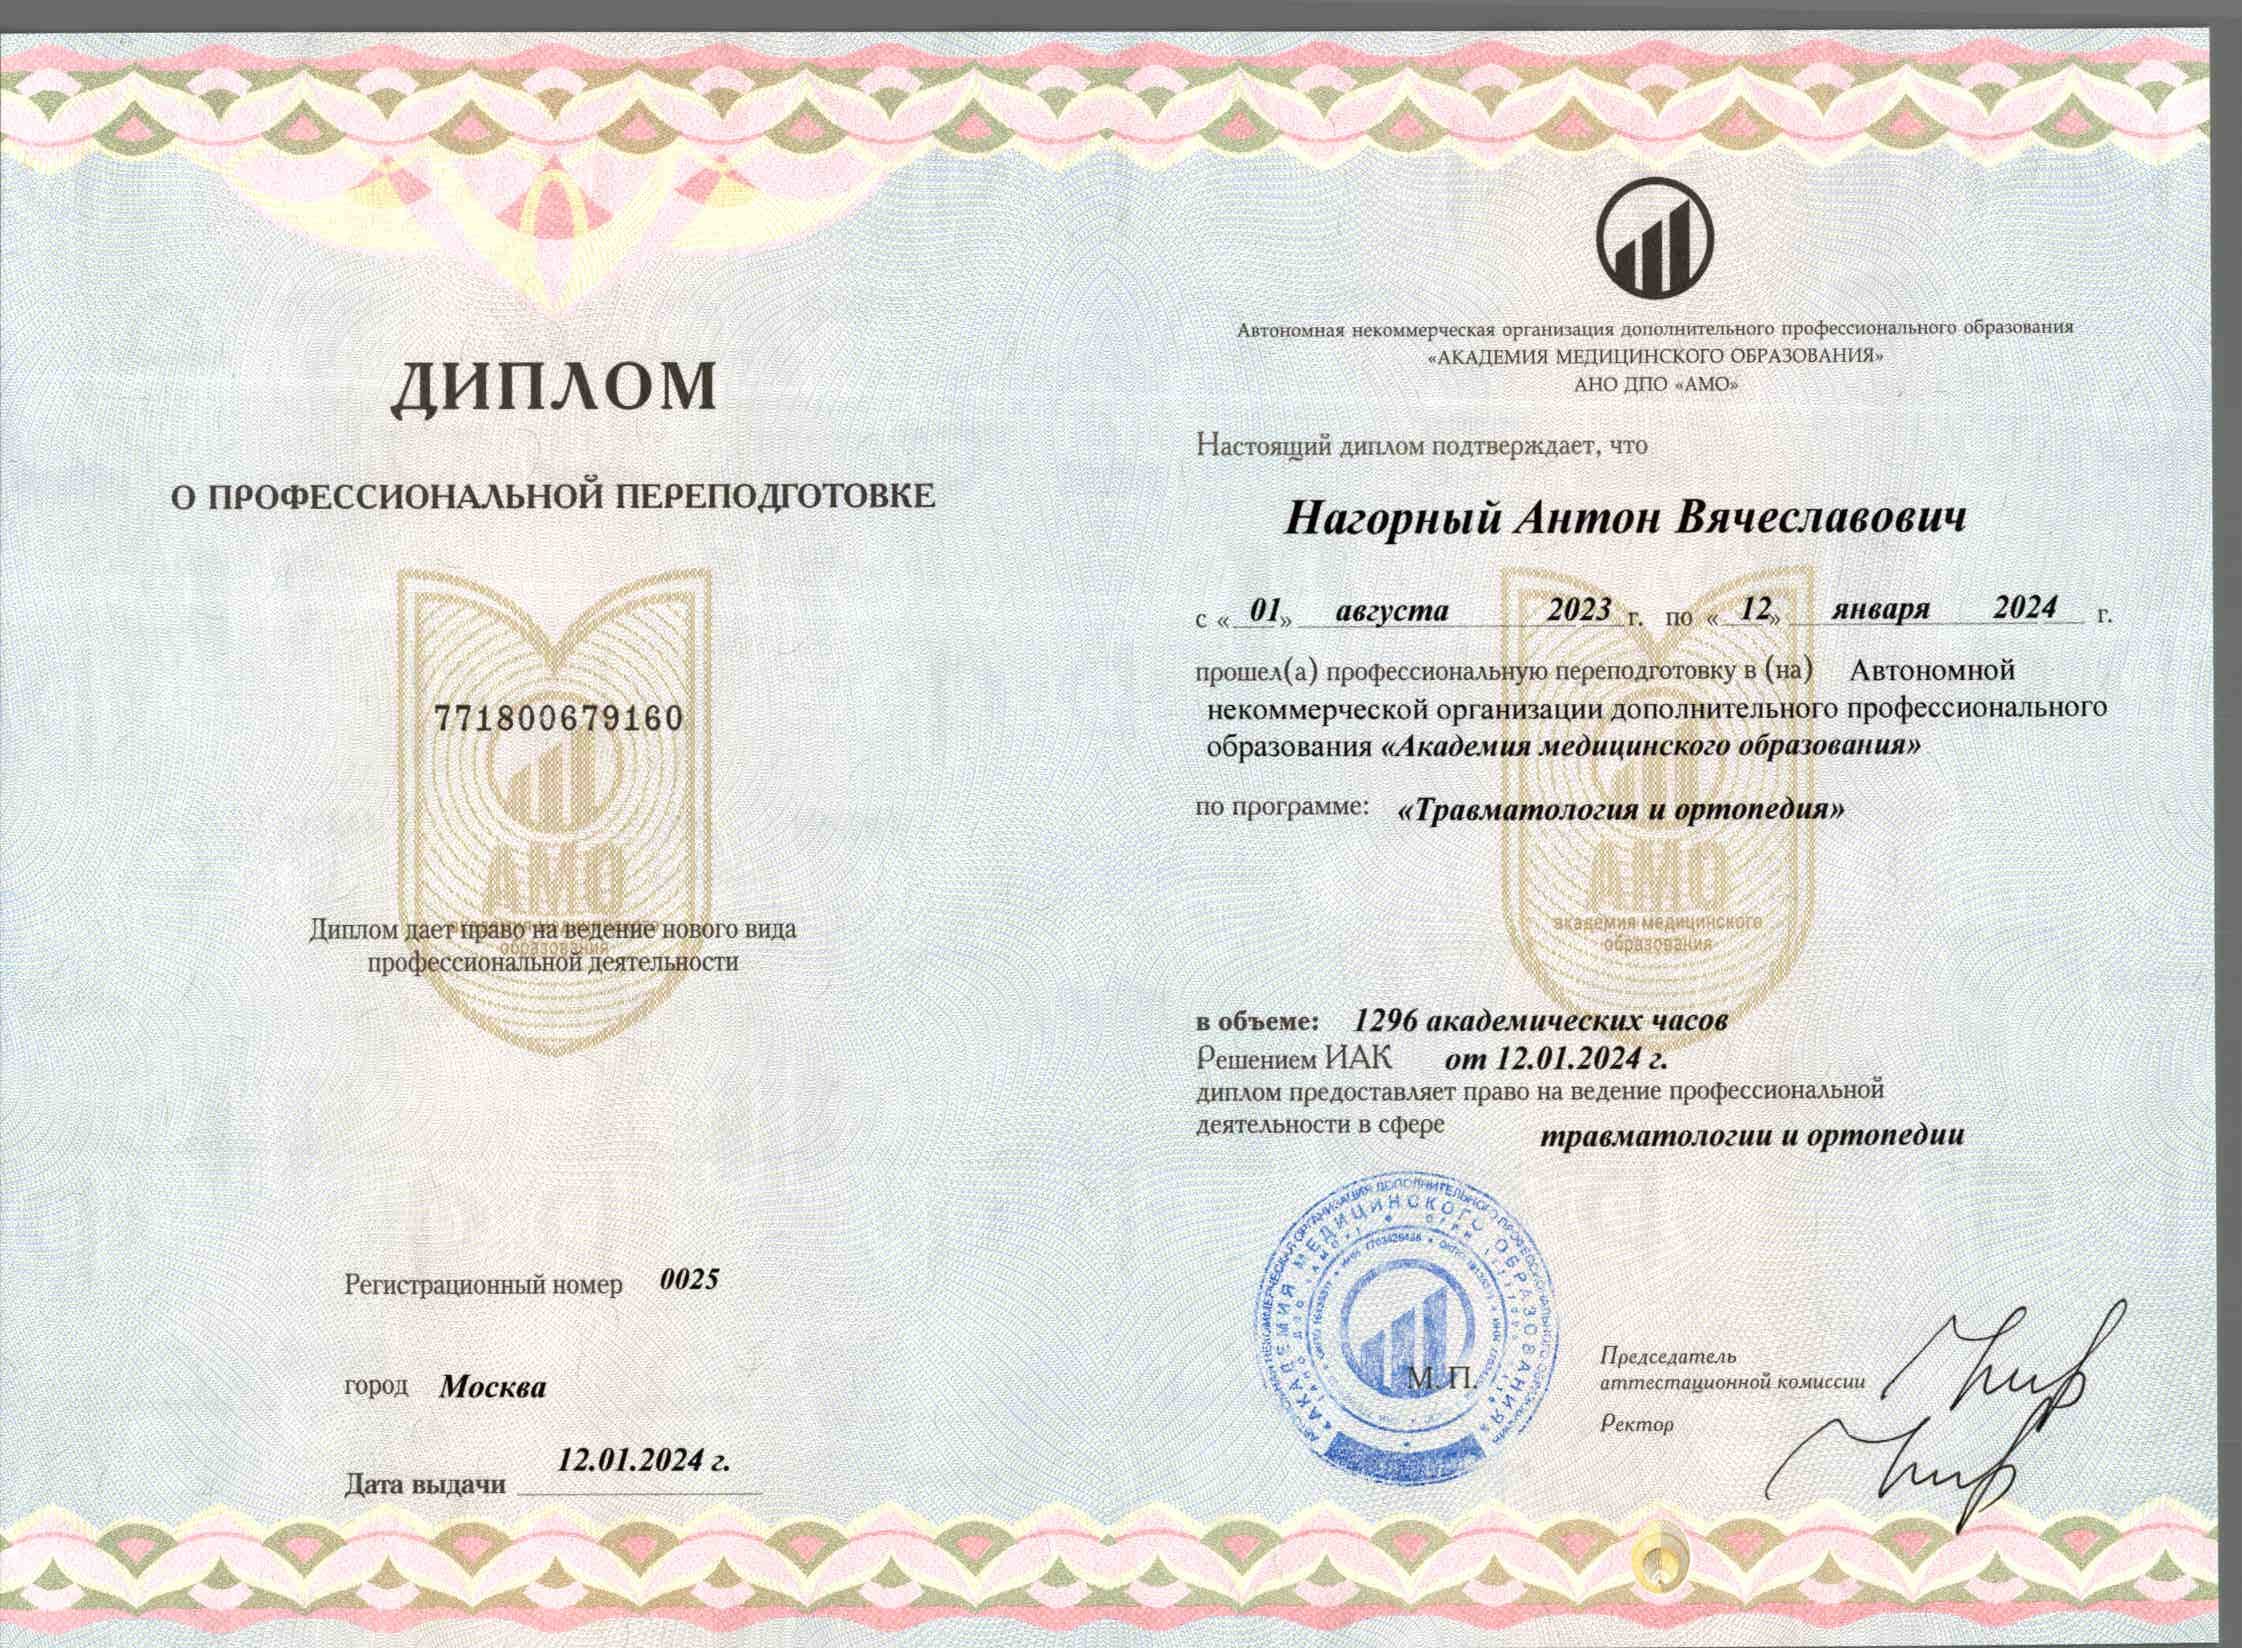 Сертификат 03